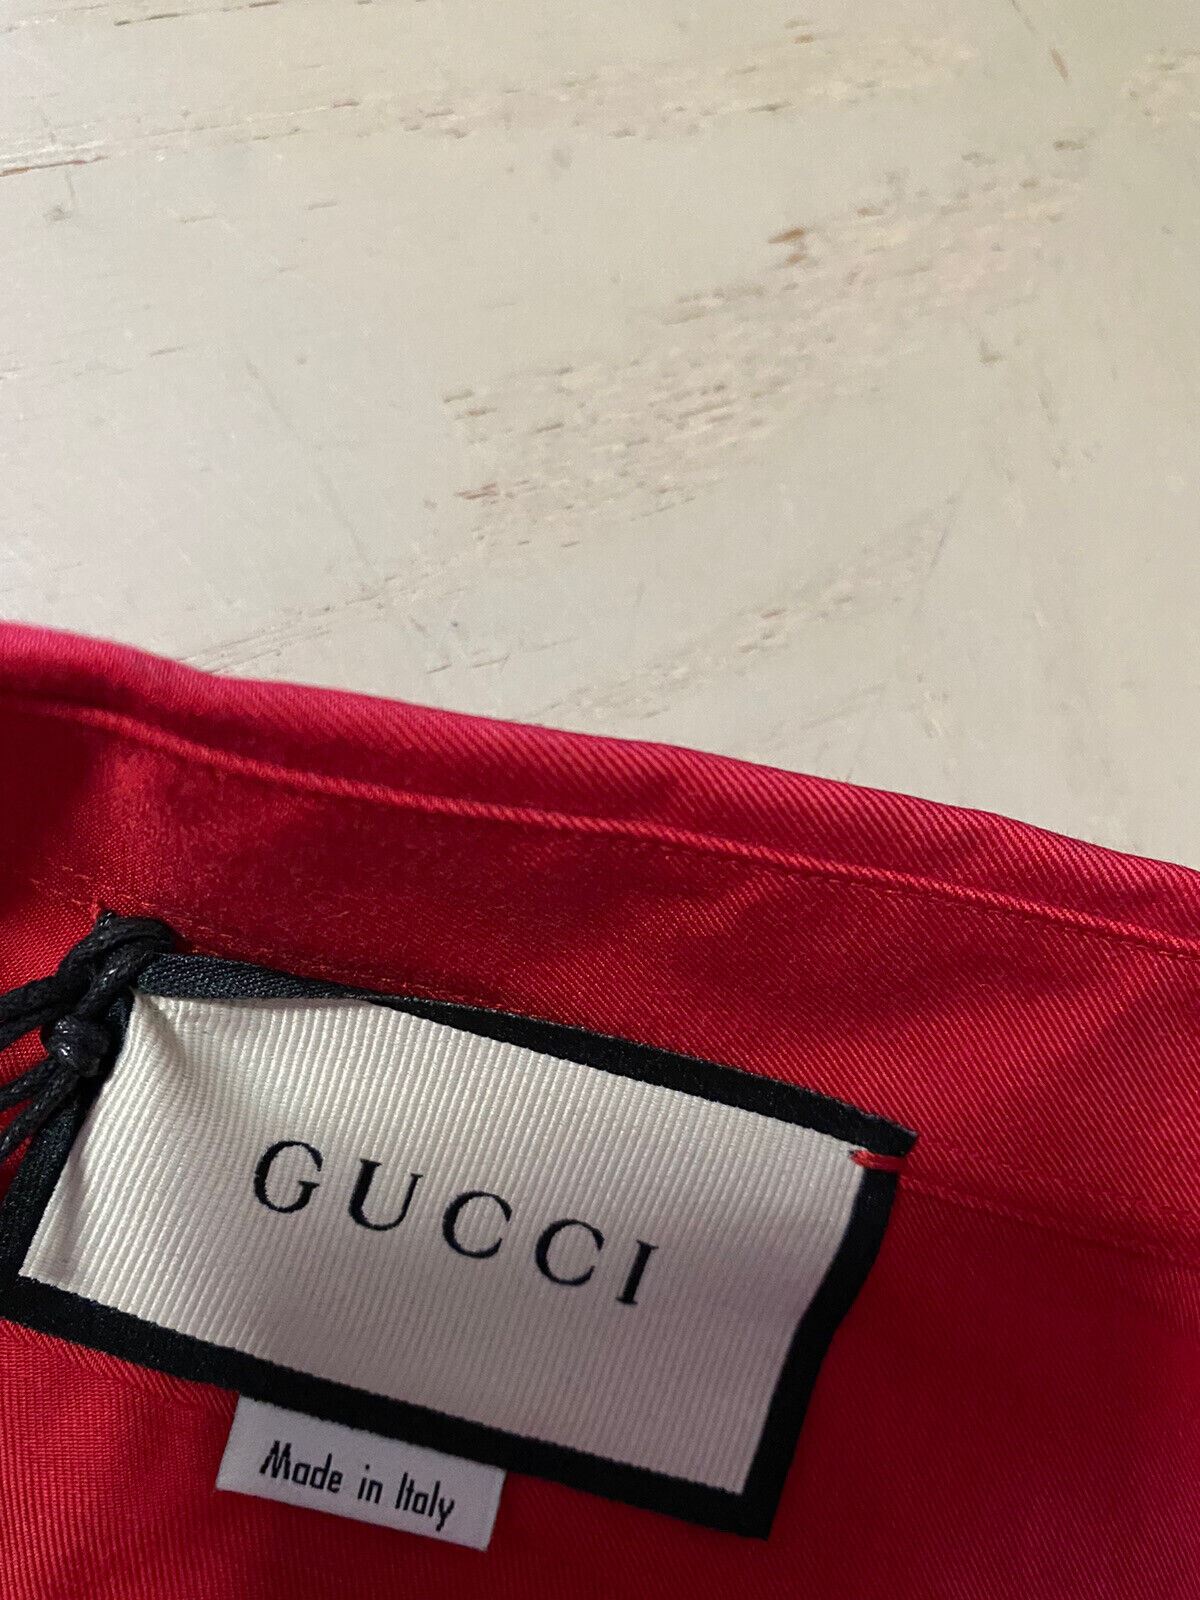 New $1200 Gucci Men’s Long Sleeve Dress Shirt DK Burgundy Size XXL/54 Eu Italy